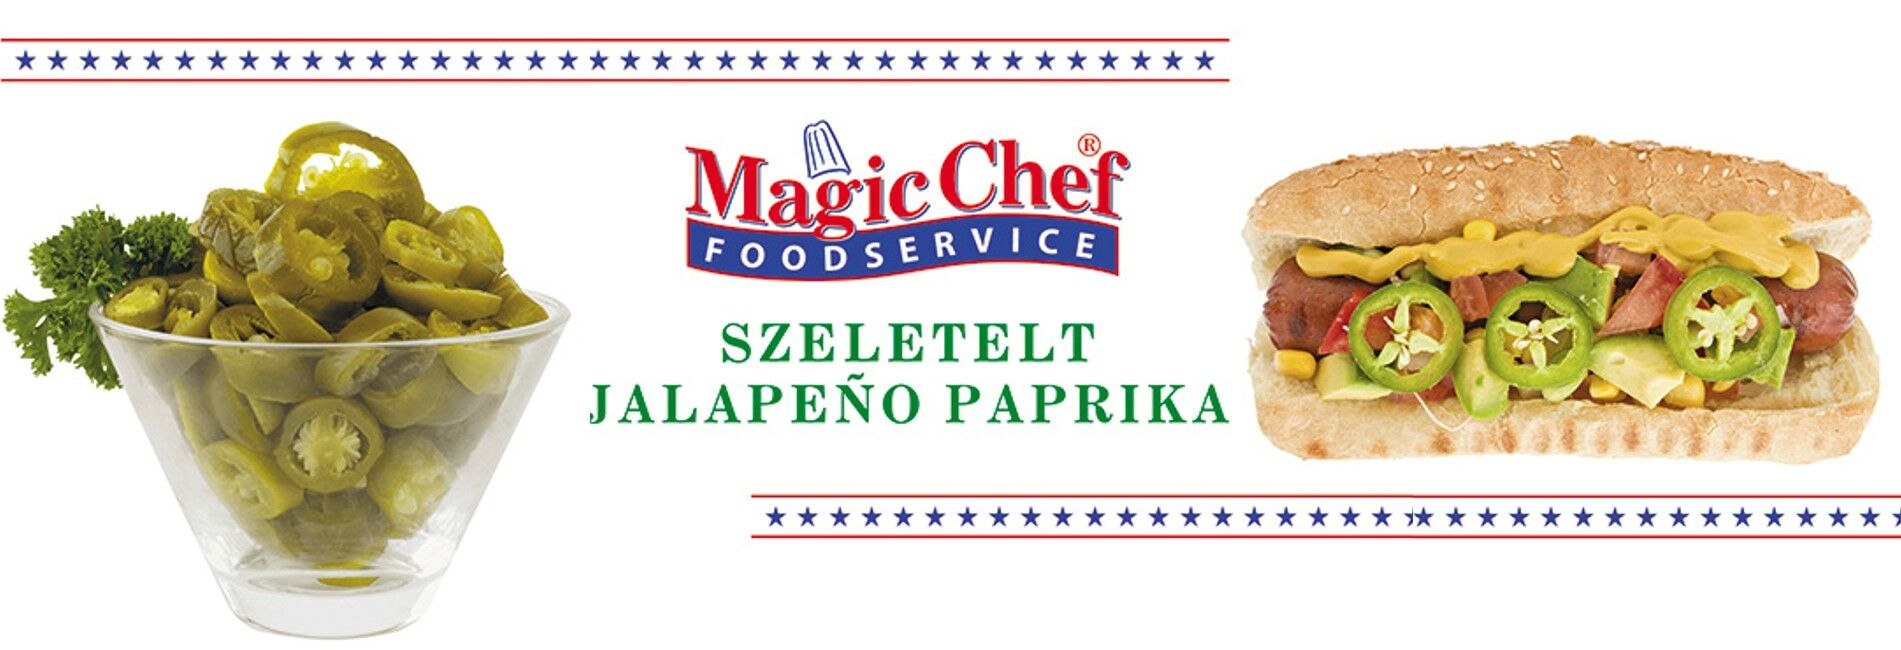 Magic Chef Jalapeno